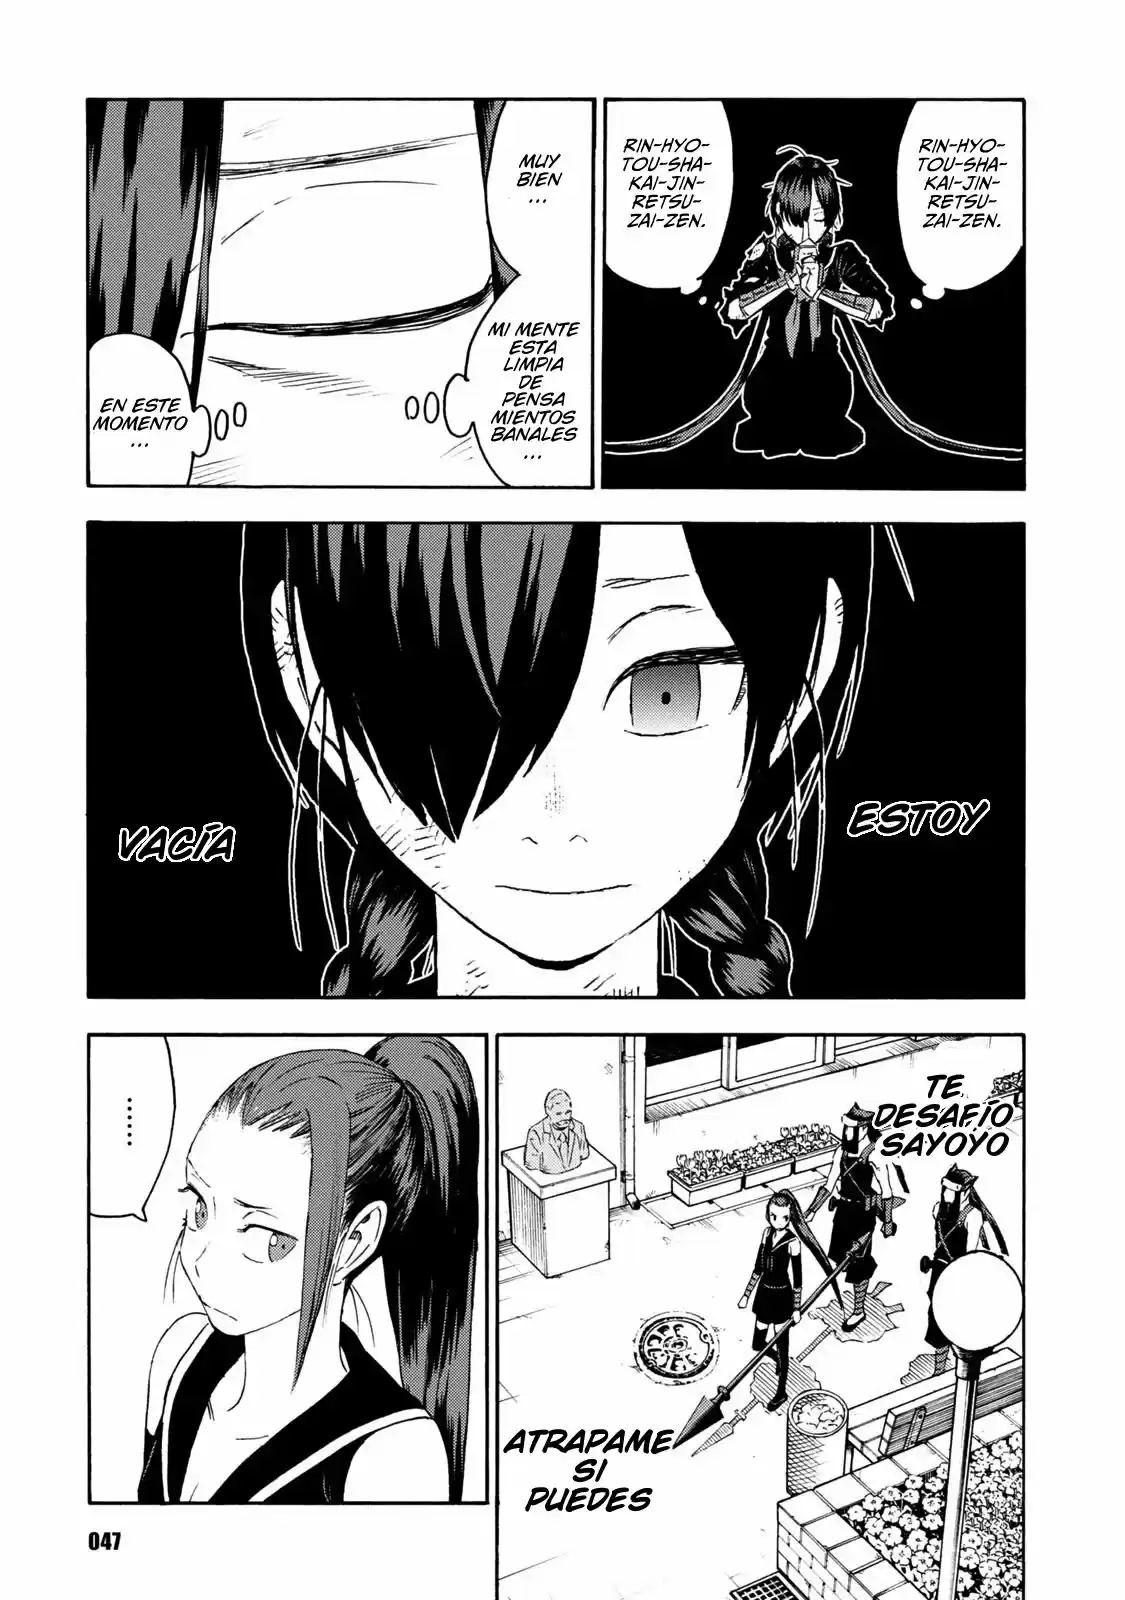 Shinobuna! Chiyo-chan: Chapter 10 - Page 1